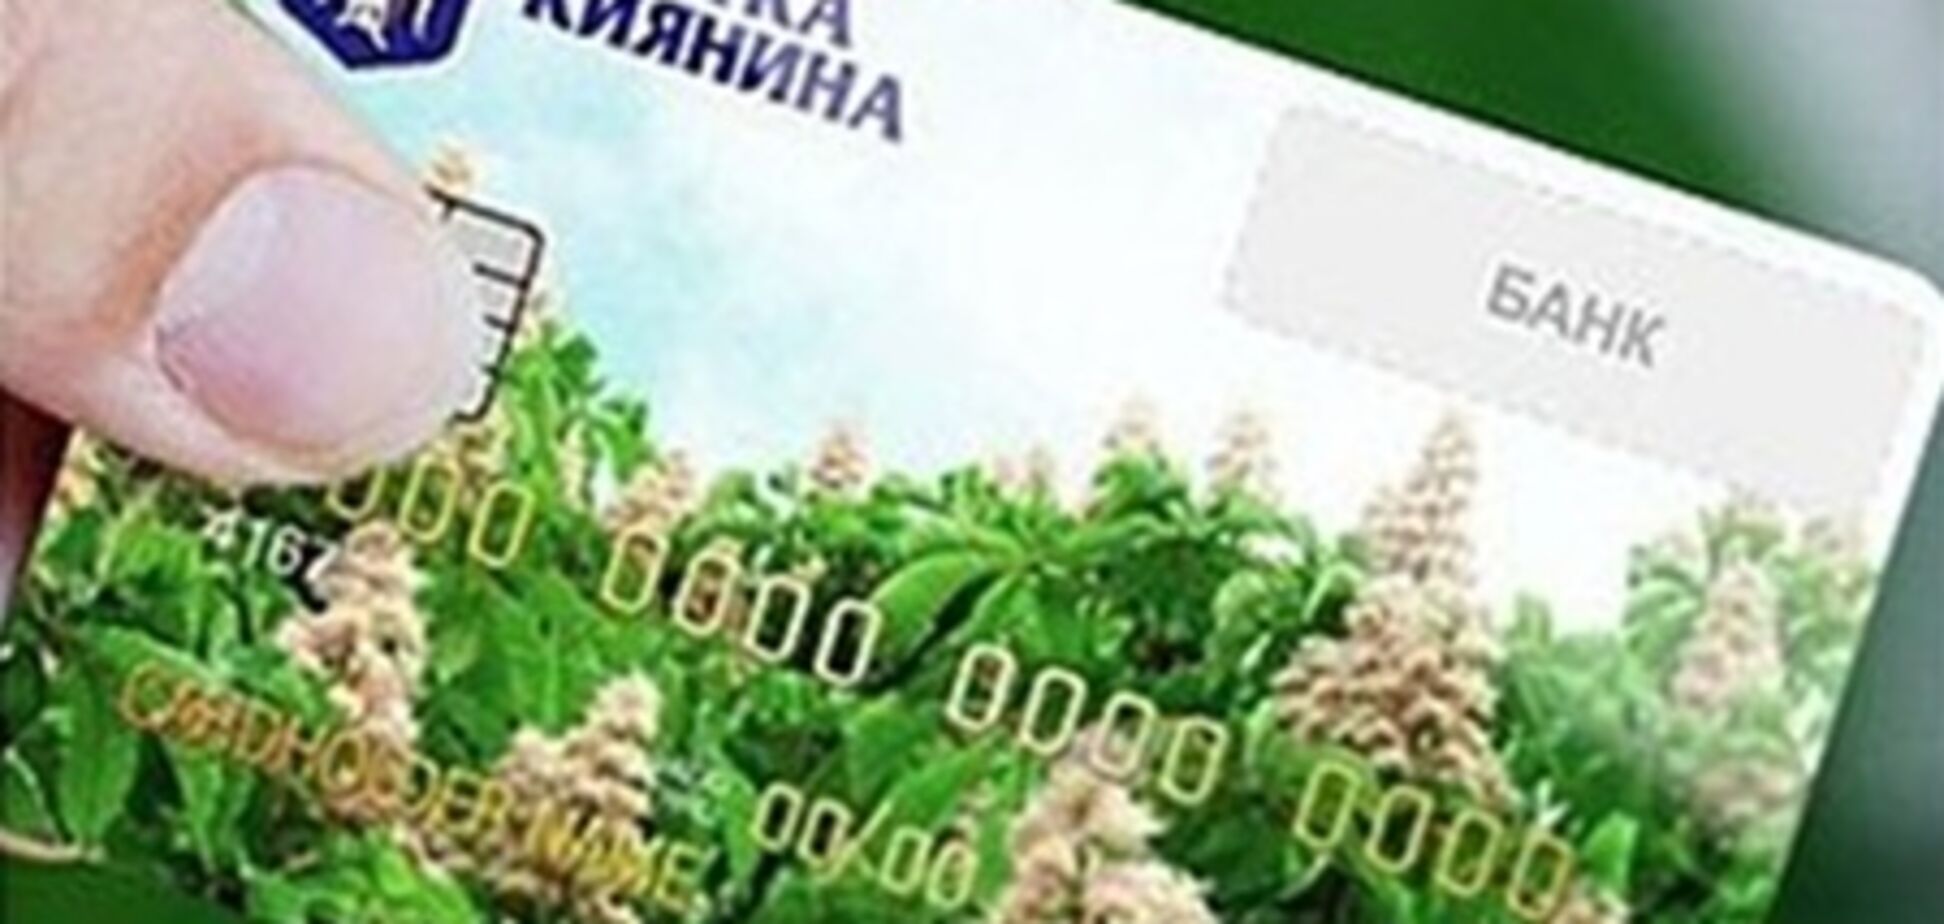 Скидка по 'Карточке киевлянина' охватит 800 наименований лекарств?